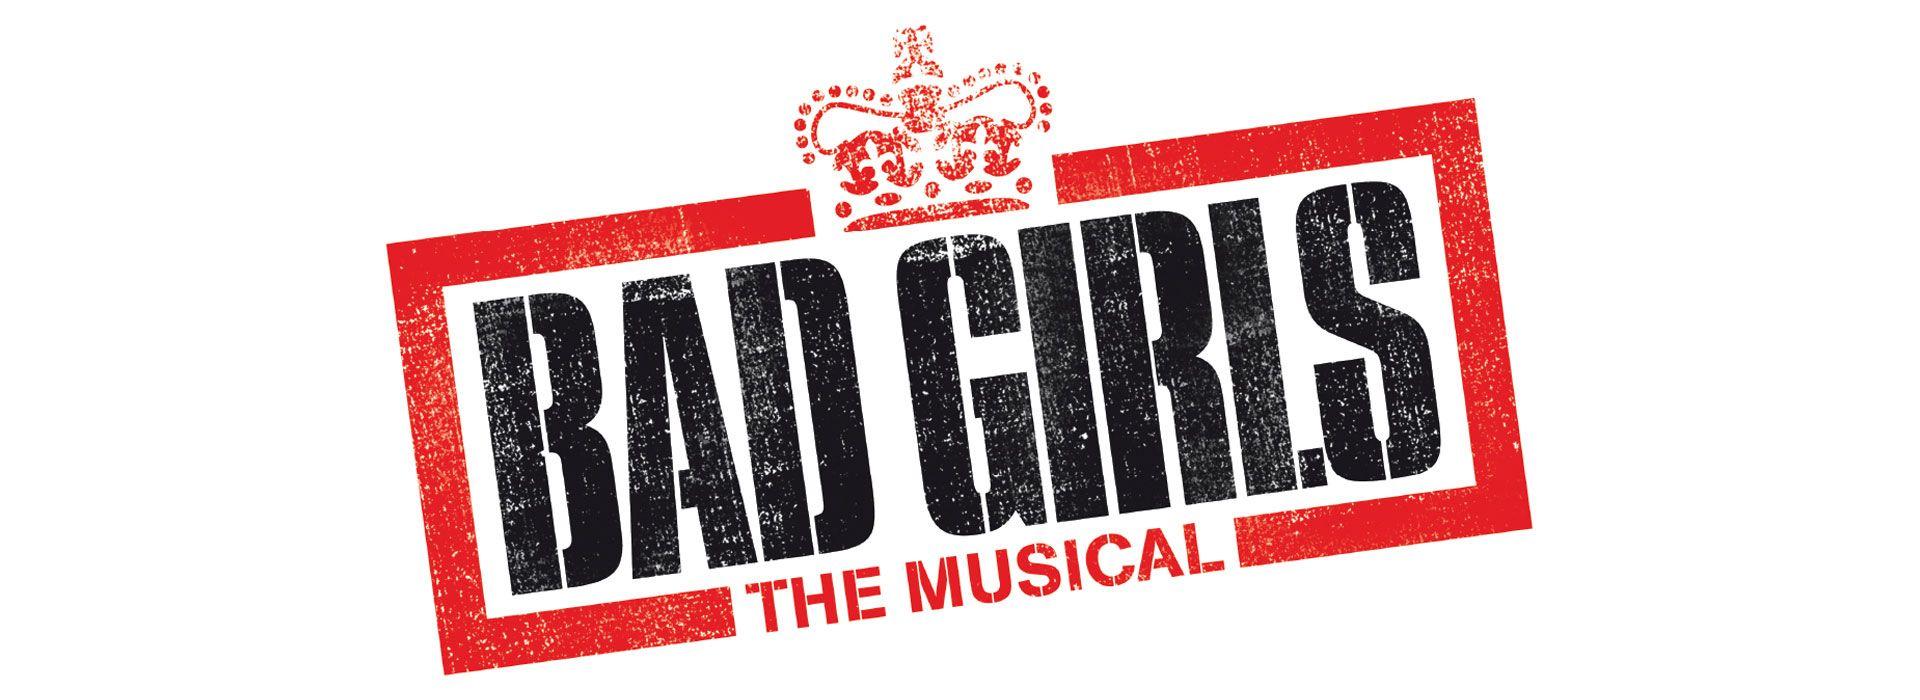 Bad Girls Logo - Bad Girls The Musical